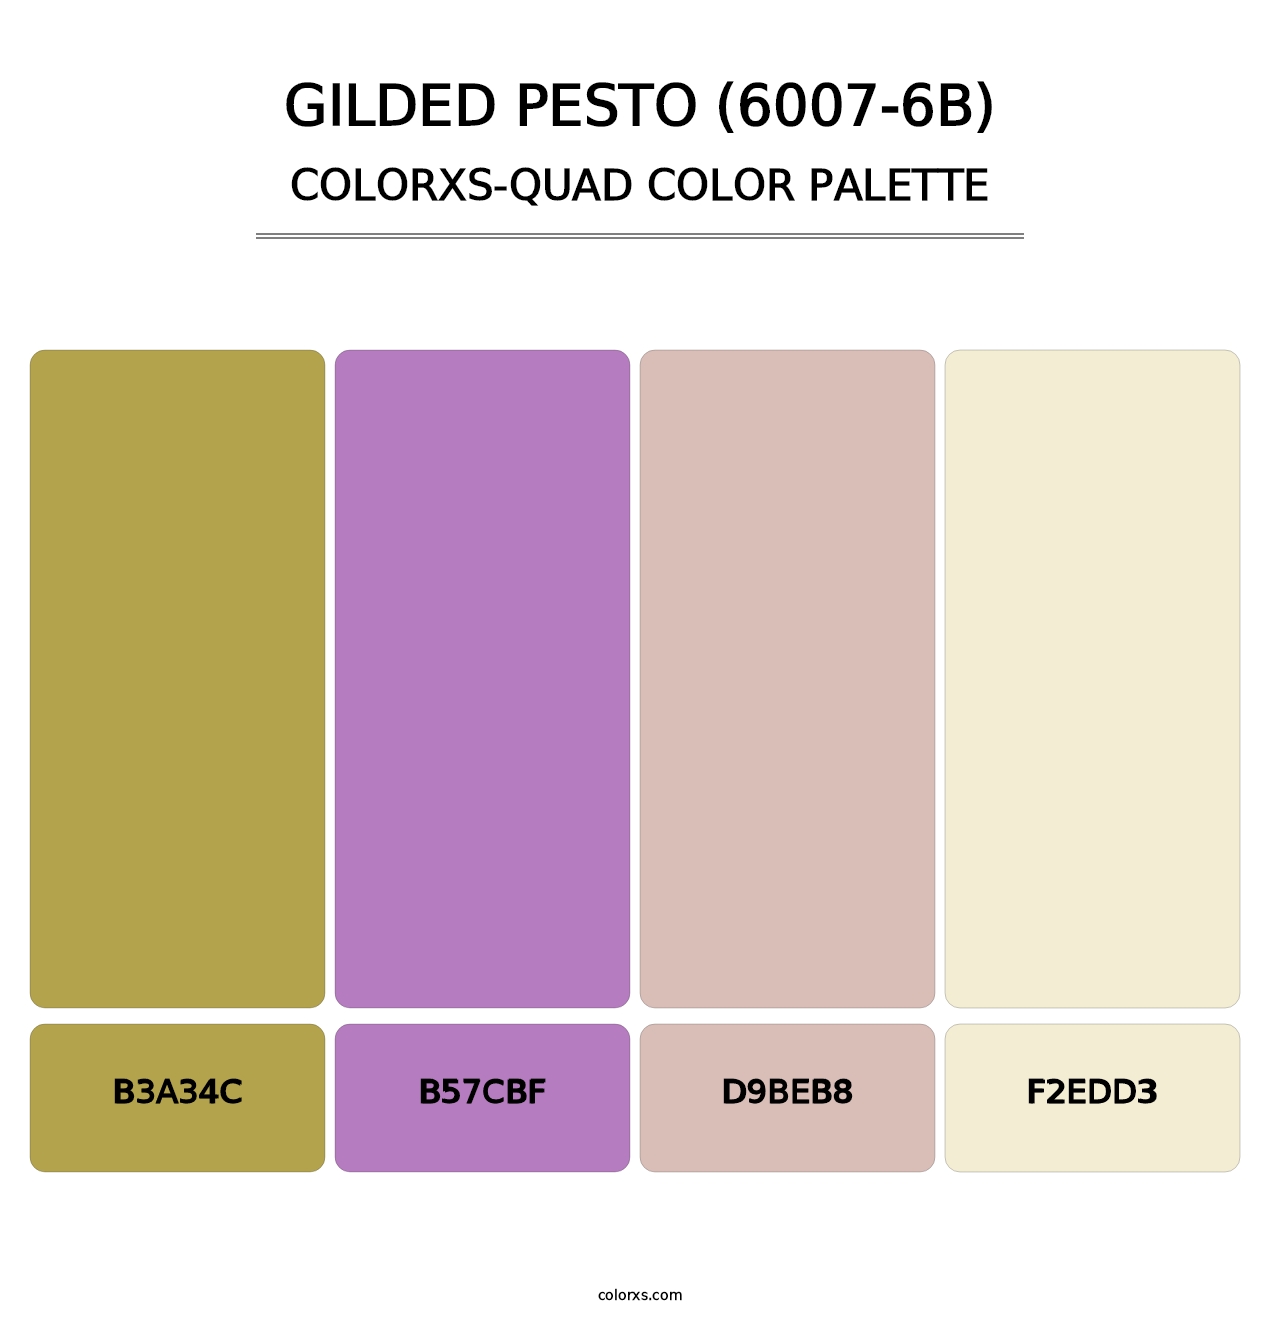 Gilded Pesto (6007-6B) - Colorxs Quad Palette